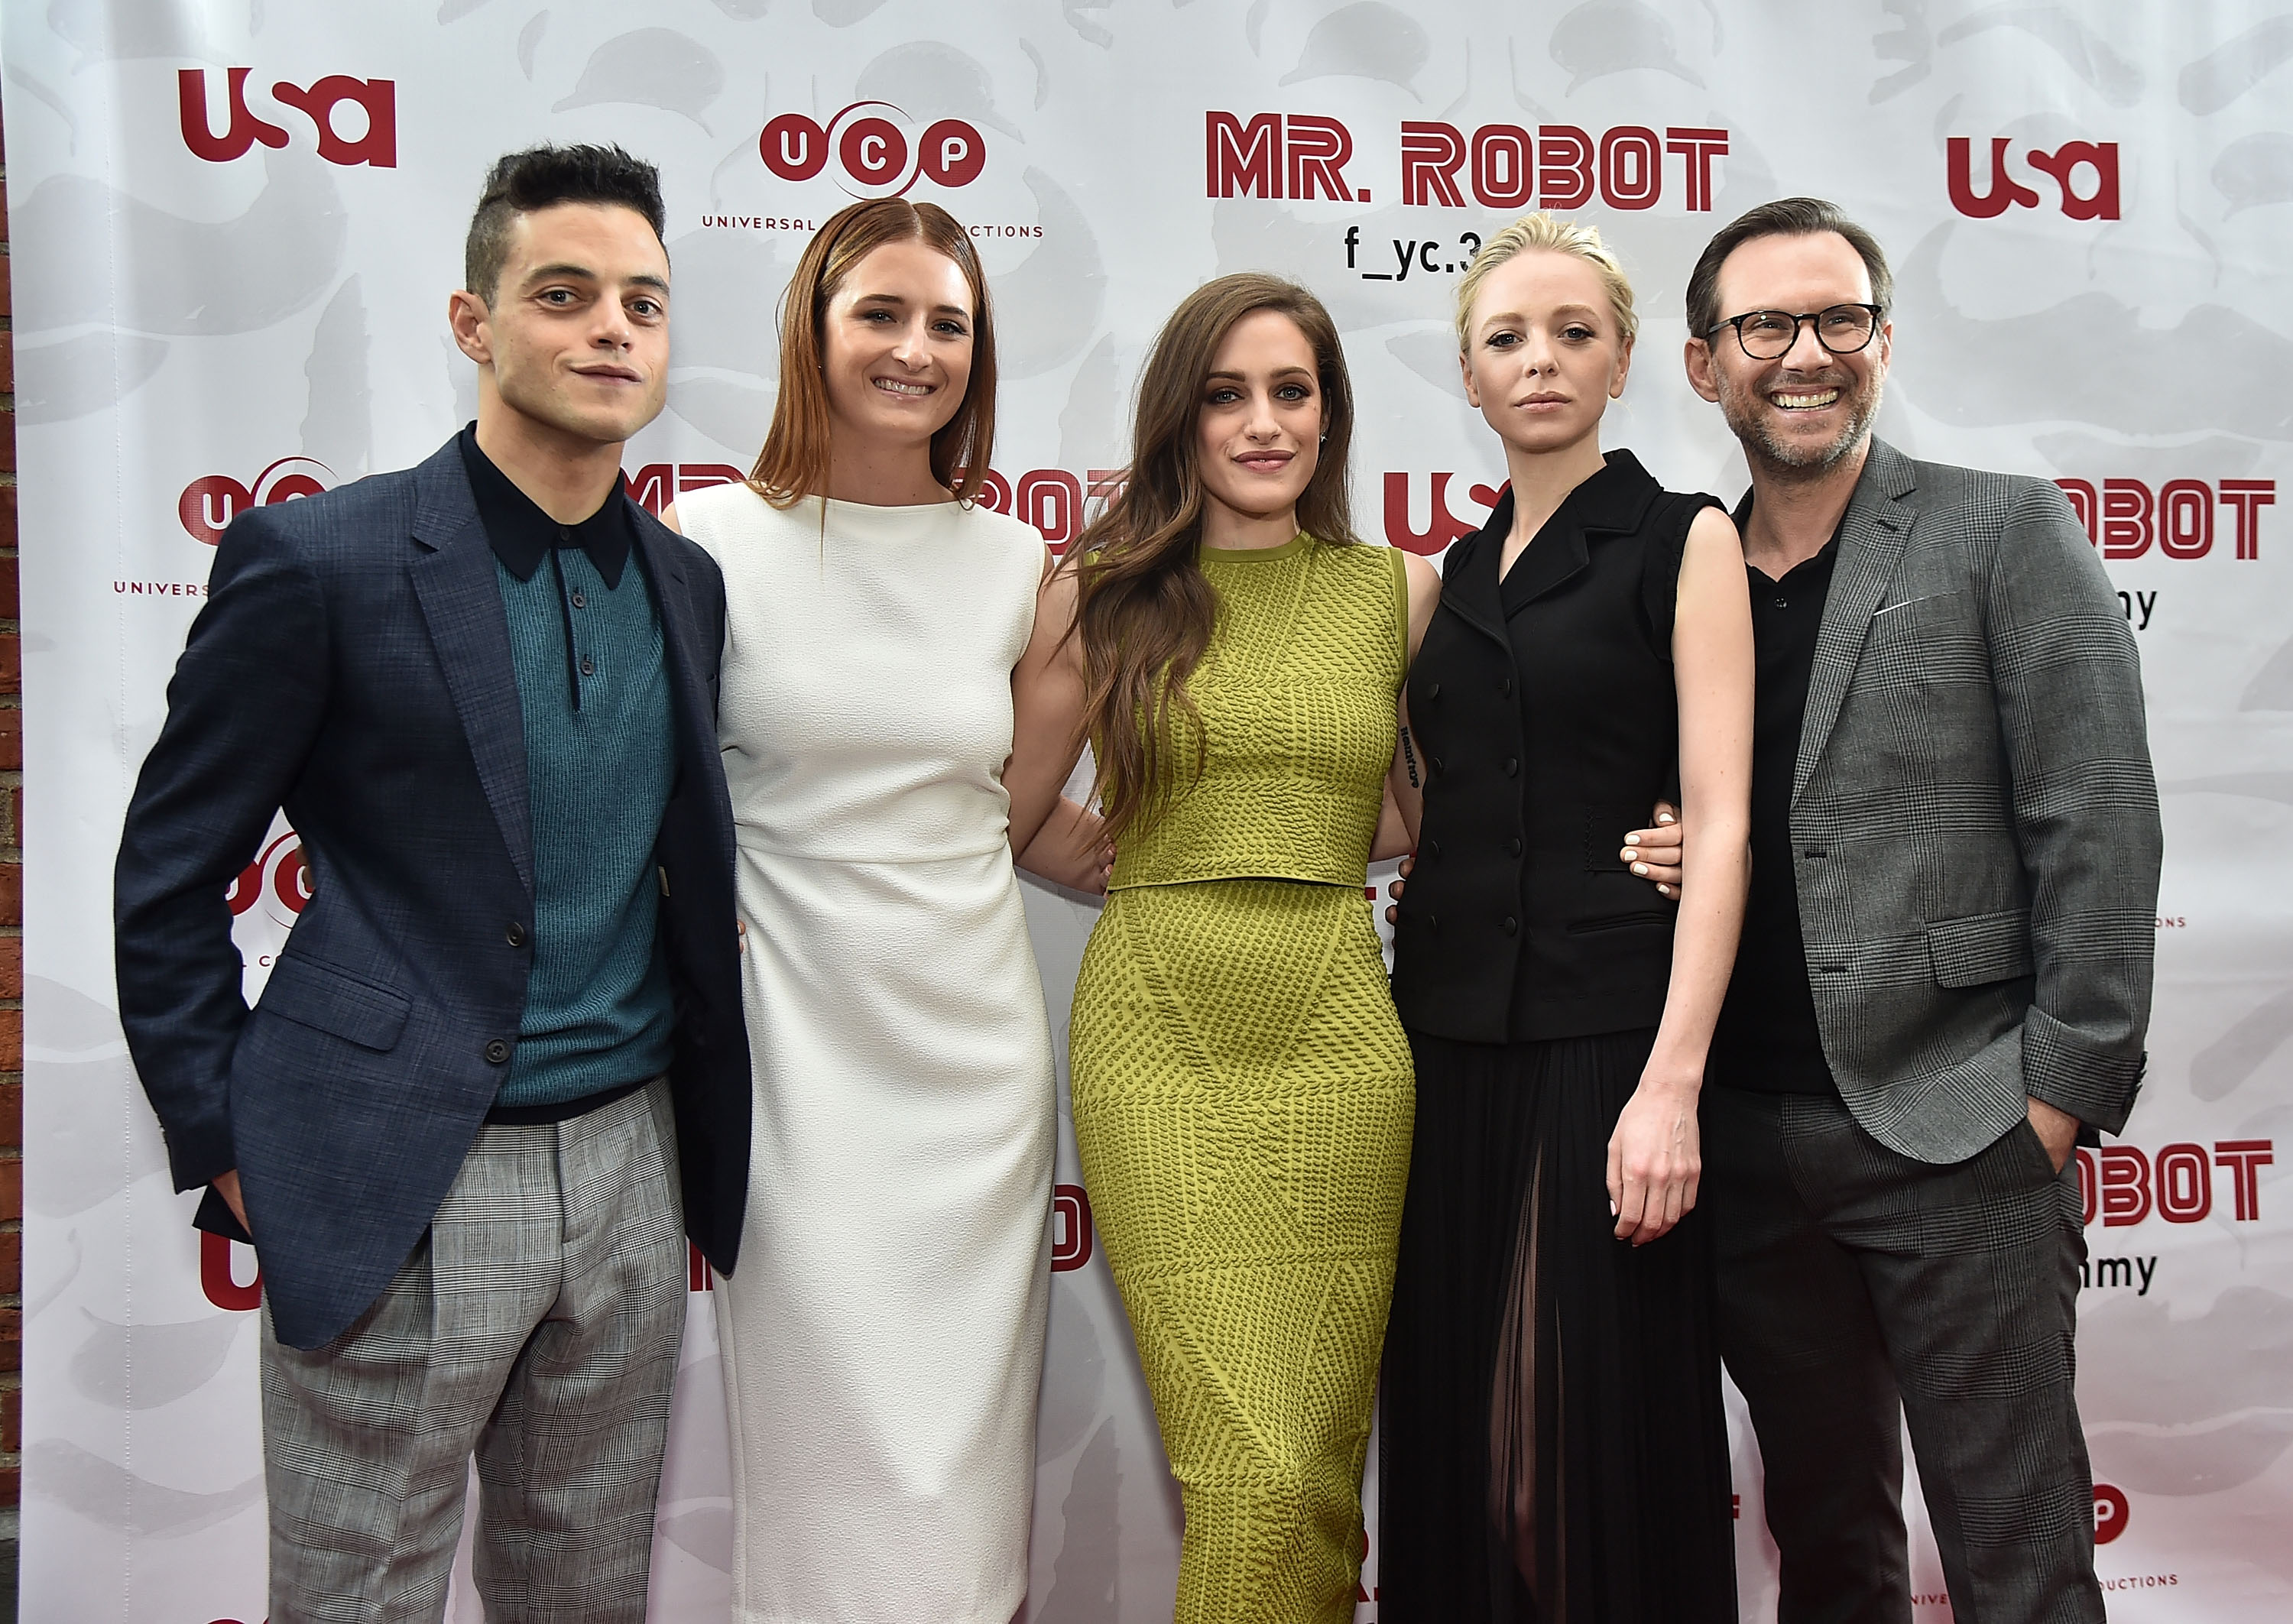 Prime Video: Mr. Robot - Season 2